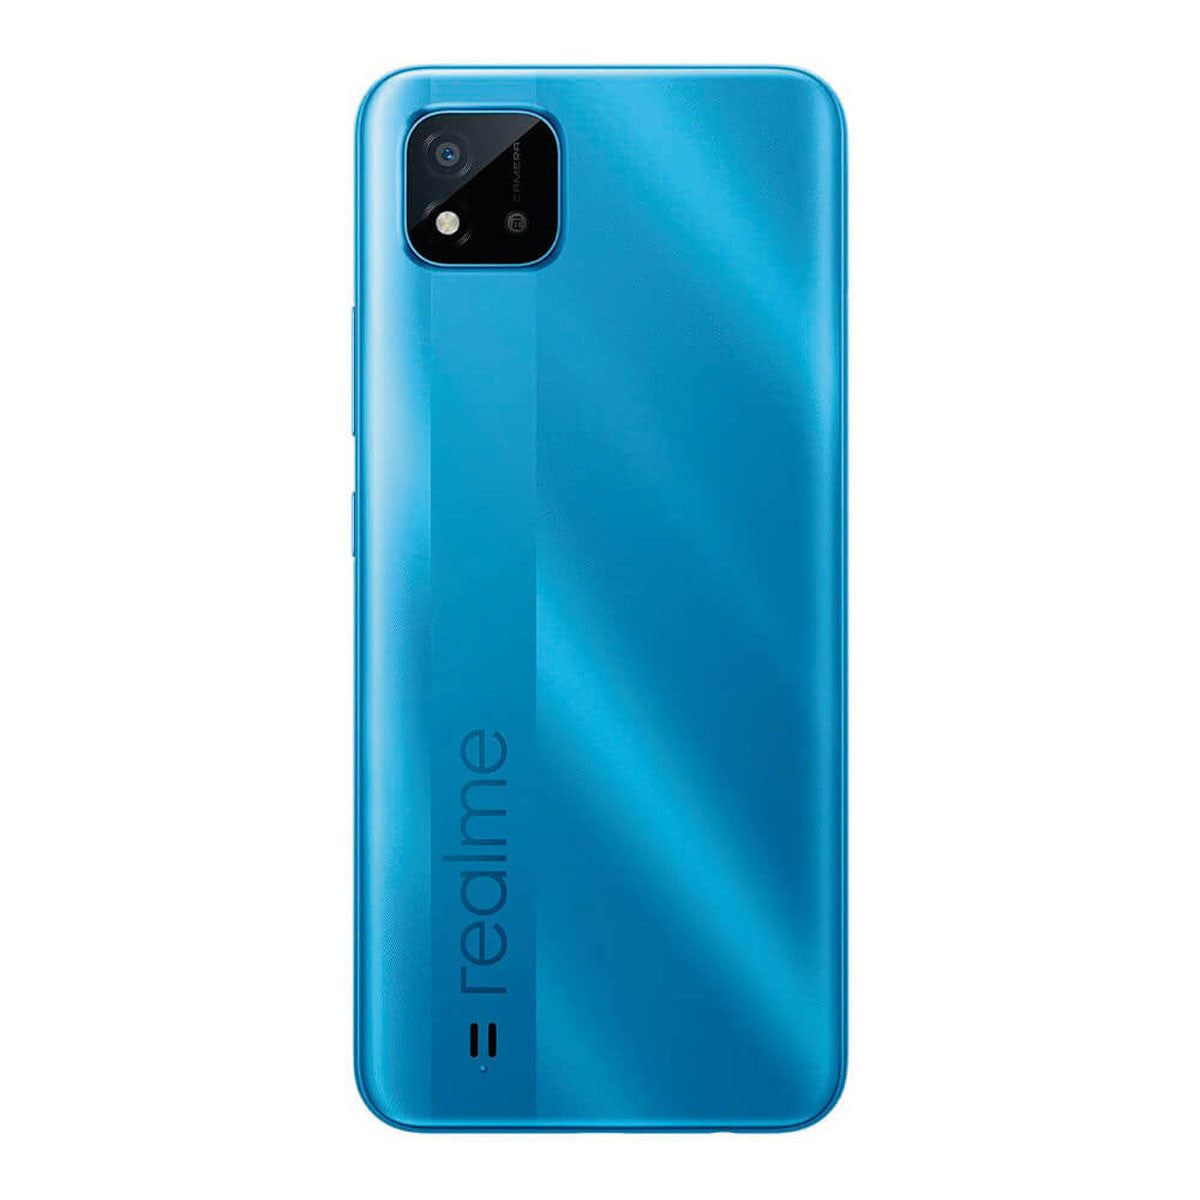 Realme C11 (2021) 2GB/32GB Azul (Lake Blue) Dual SIM Smartphone | Realme